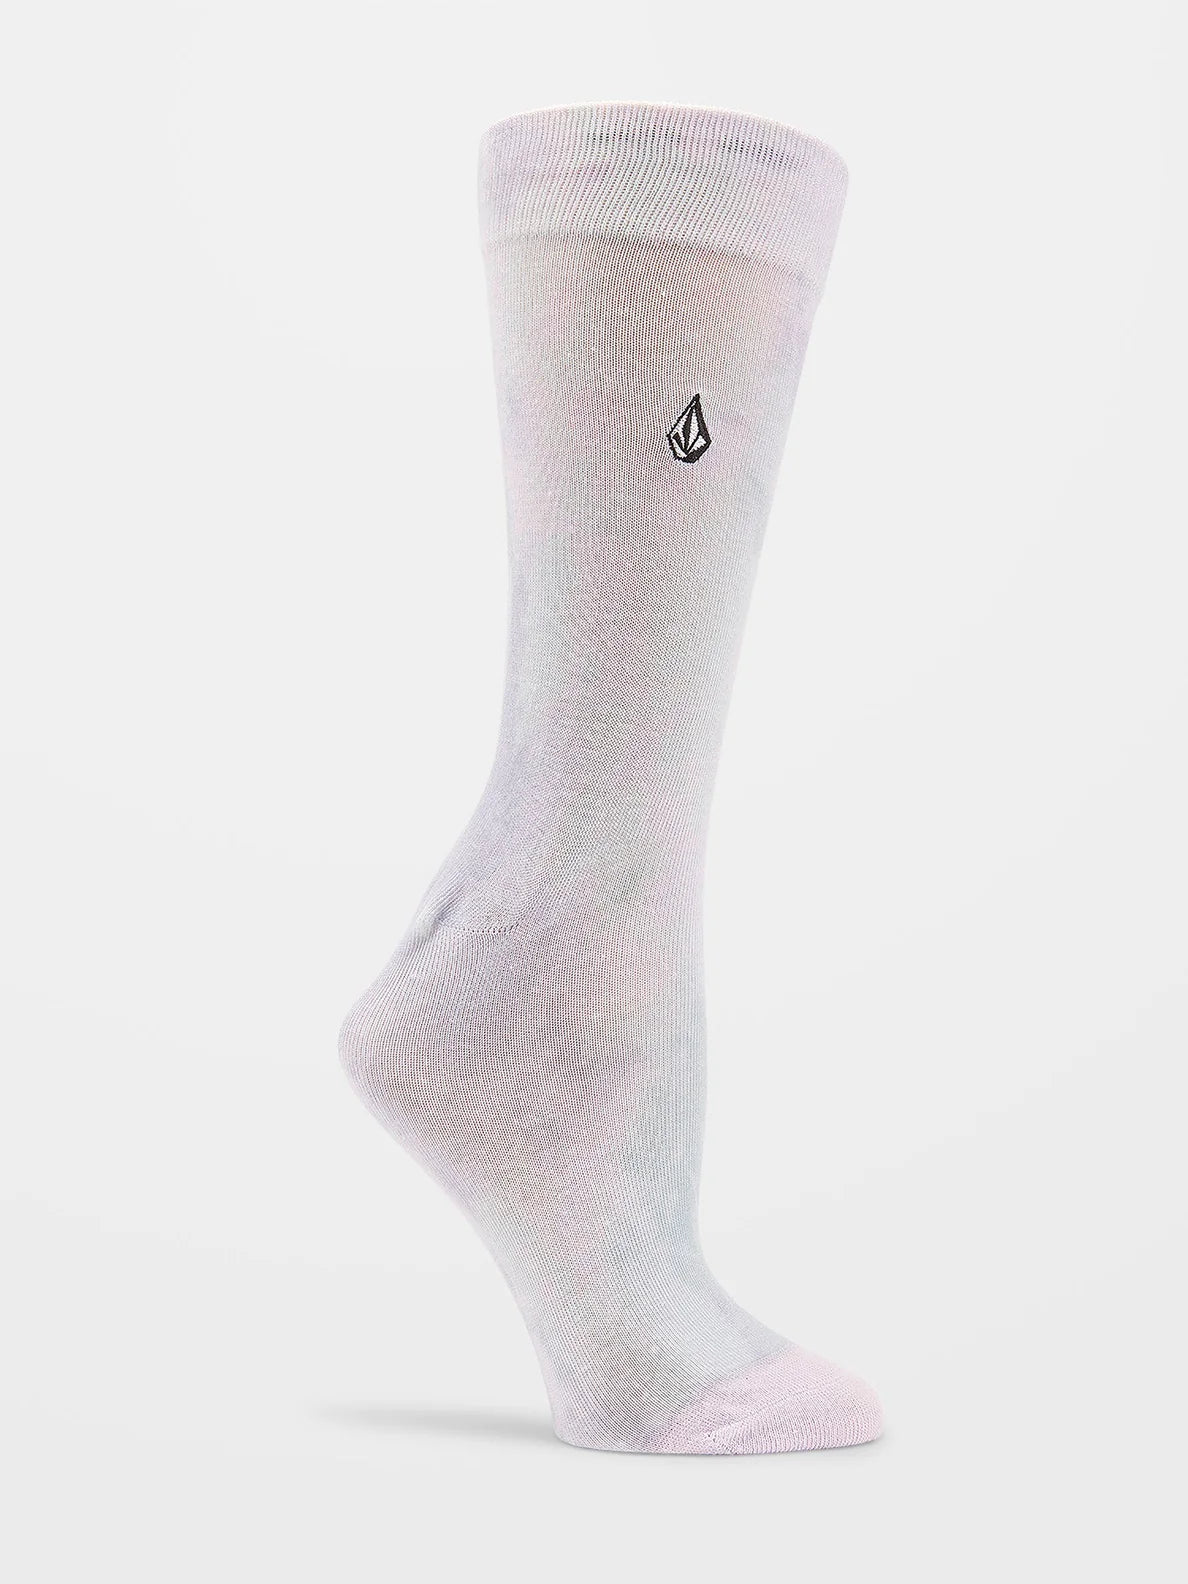 Volcom Truly Stoked Socken Steinblau | Meistverkaufte Produkte | Neue Produkte | Neueste Produkte | surfdevils.com